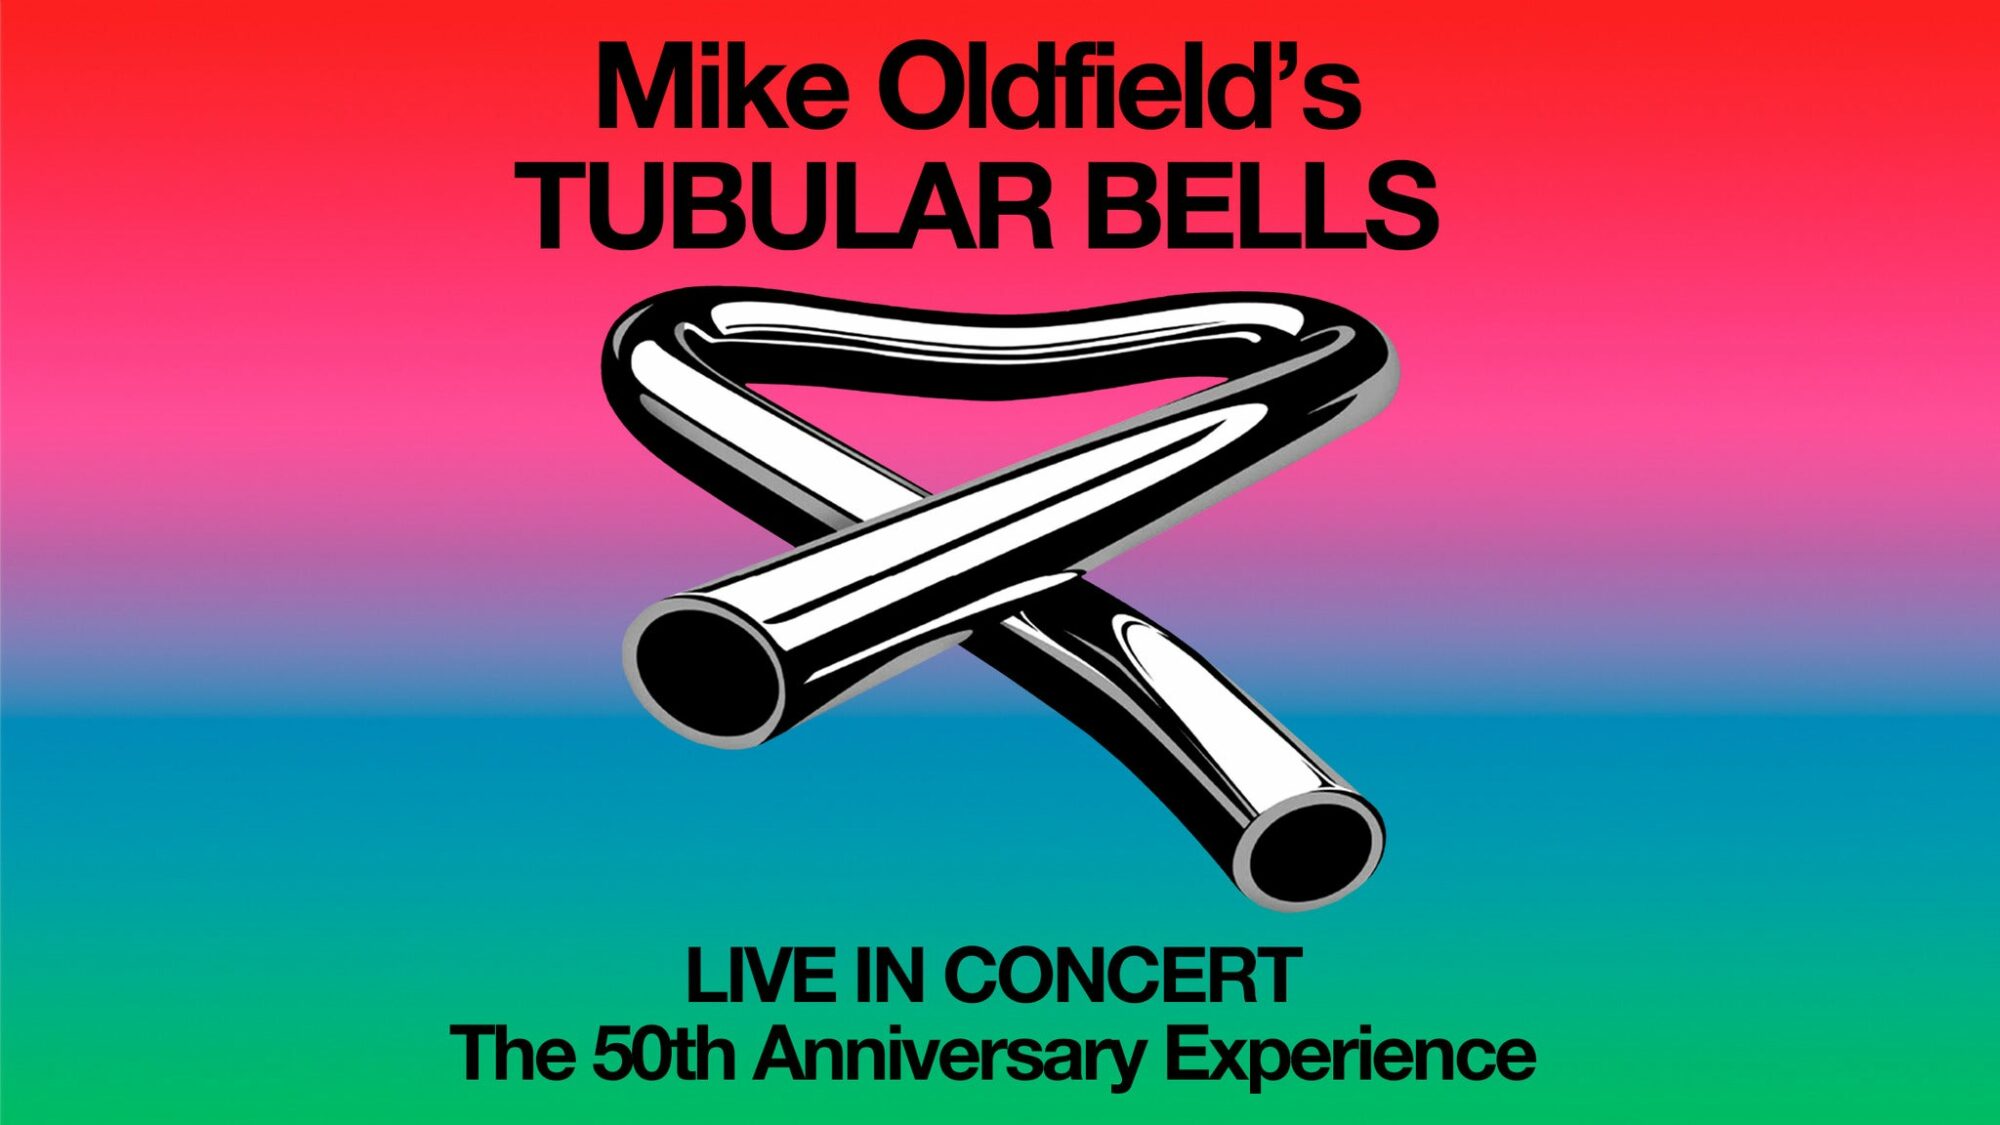 Mike Oldfield’s TUBULAR BELLS – The 50th Anniversary Celebration at St Georges Hall, Bradford, Bradford